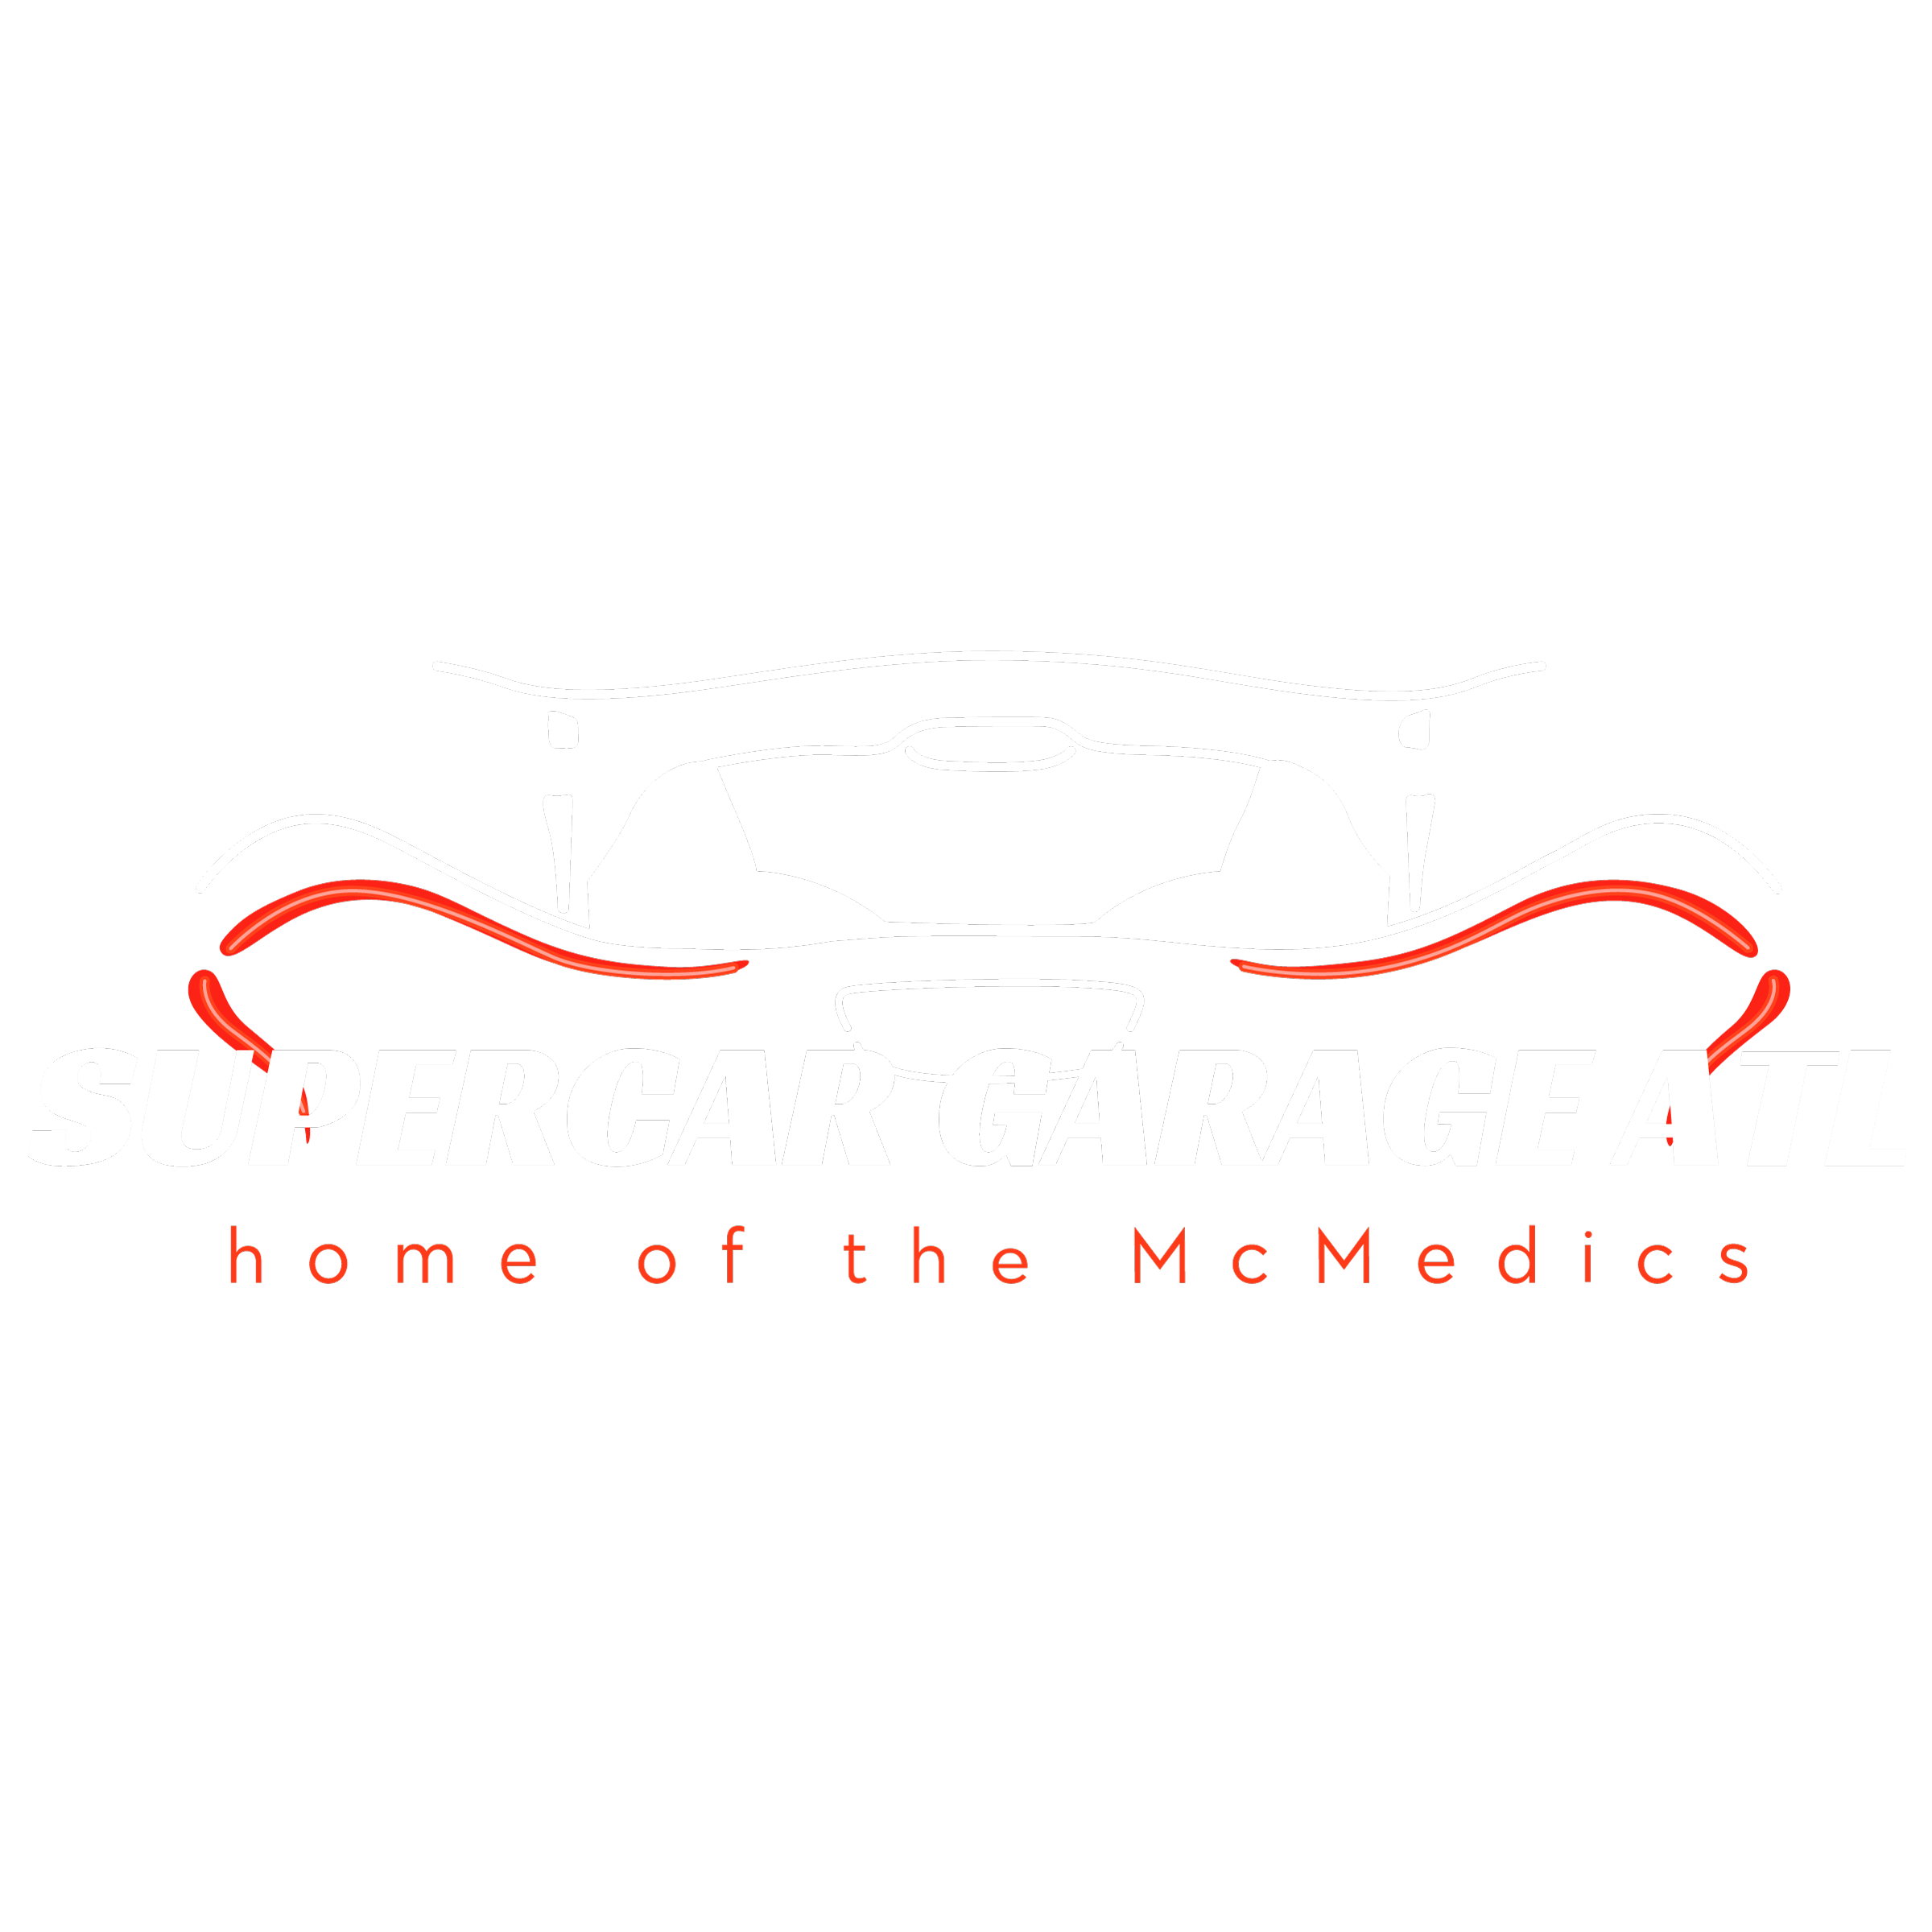 SUPERCAR GARAGE ATL - Home of the McMedics!